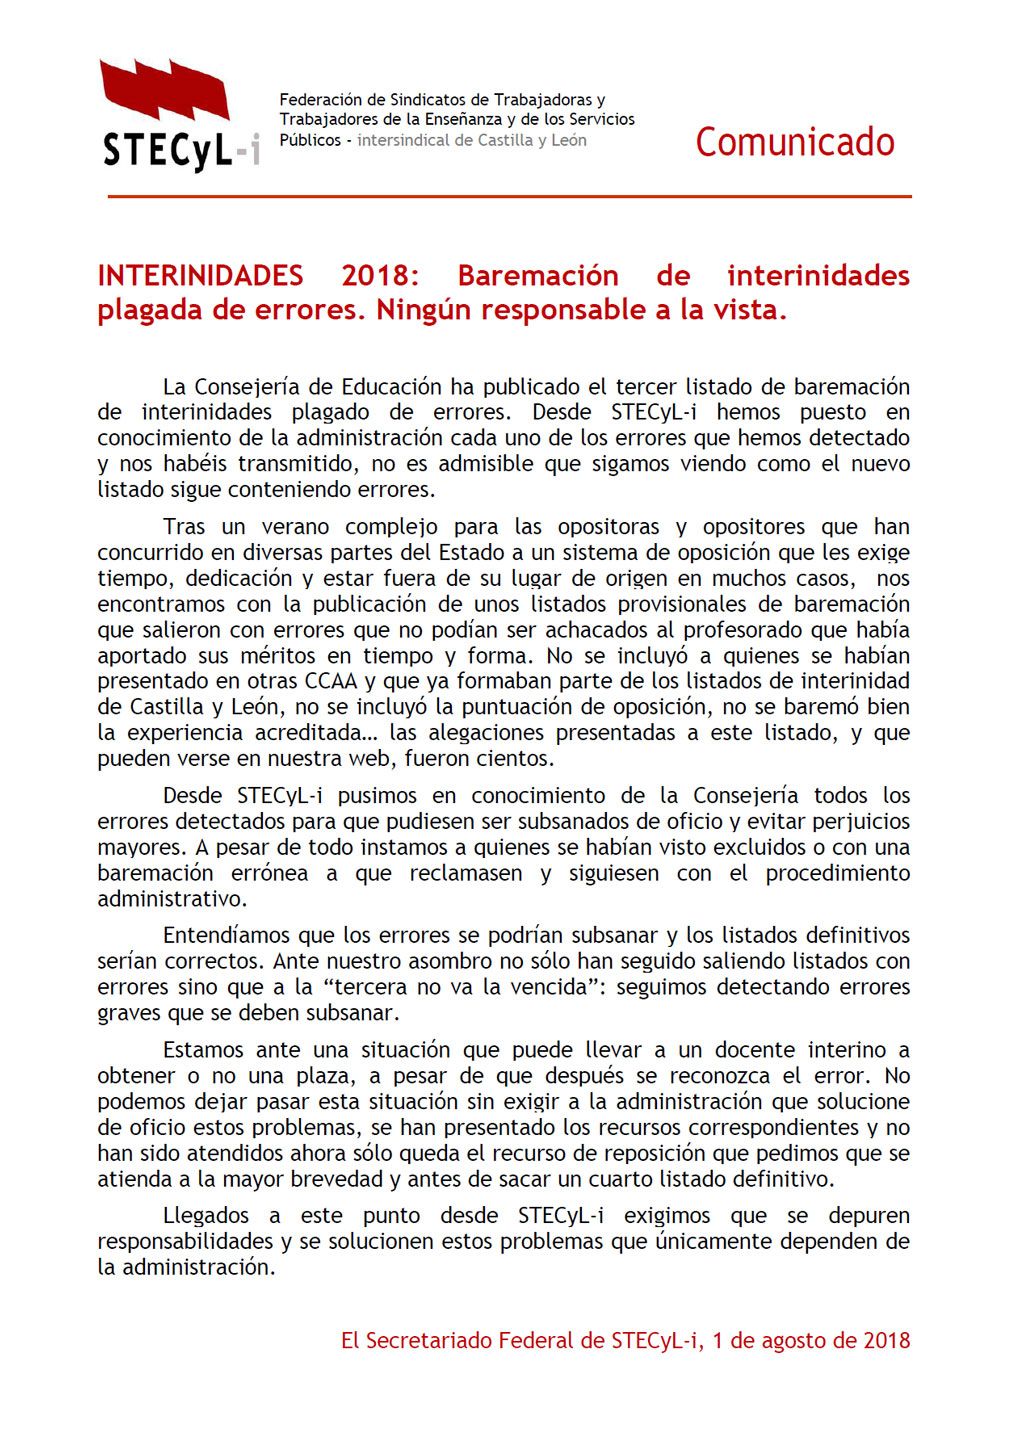 180801-Comunicado-Baremacion-Interinidades-2018